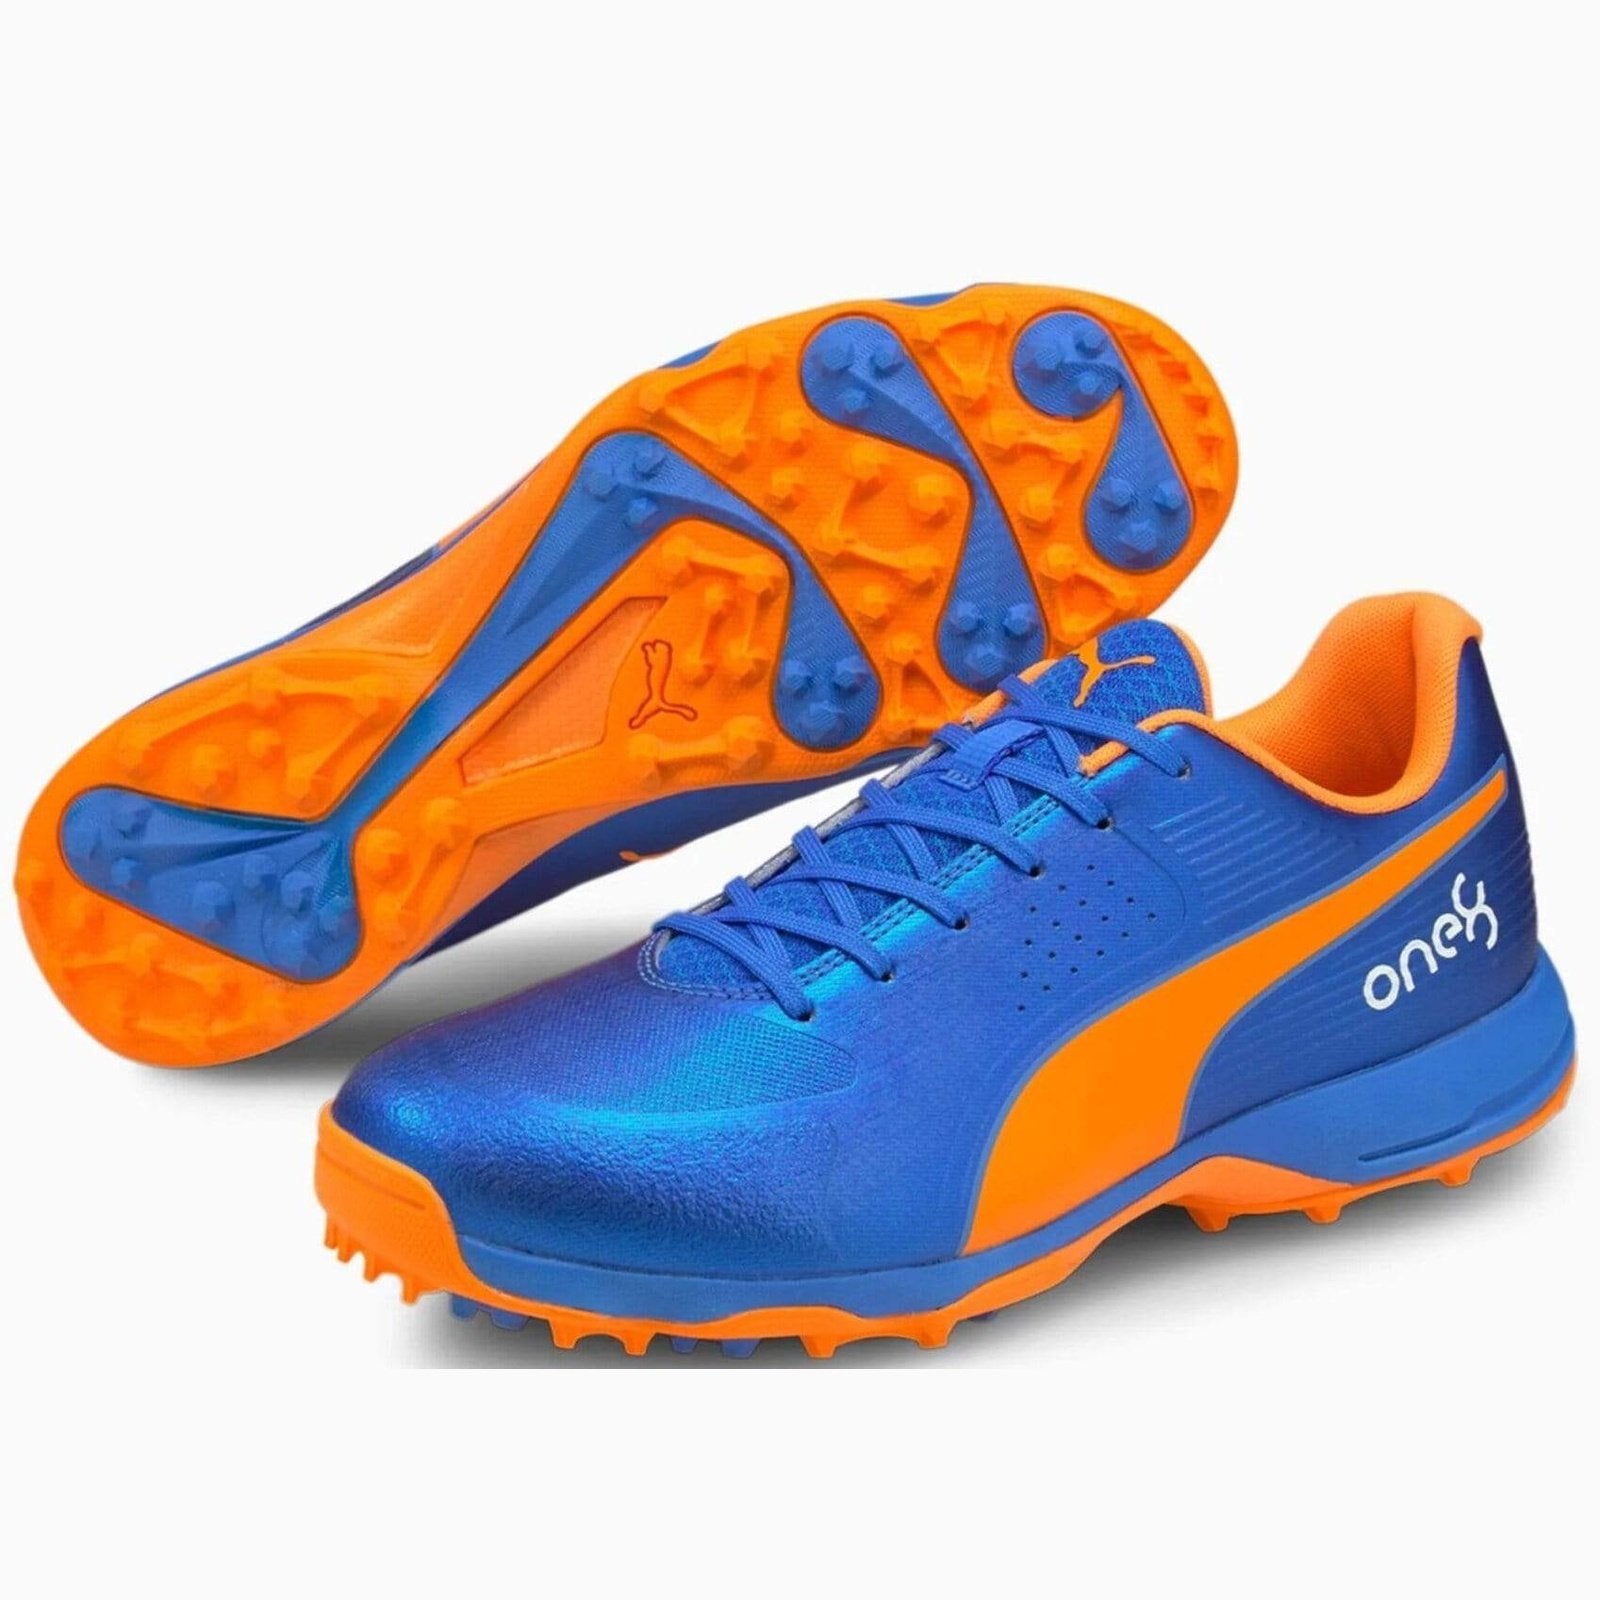 Puma Footwear Puma x One8 19 Virat Kholi Mens Rubber Cricket Shoes